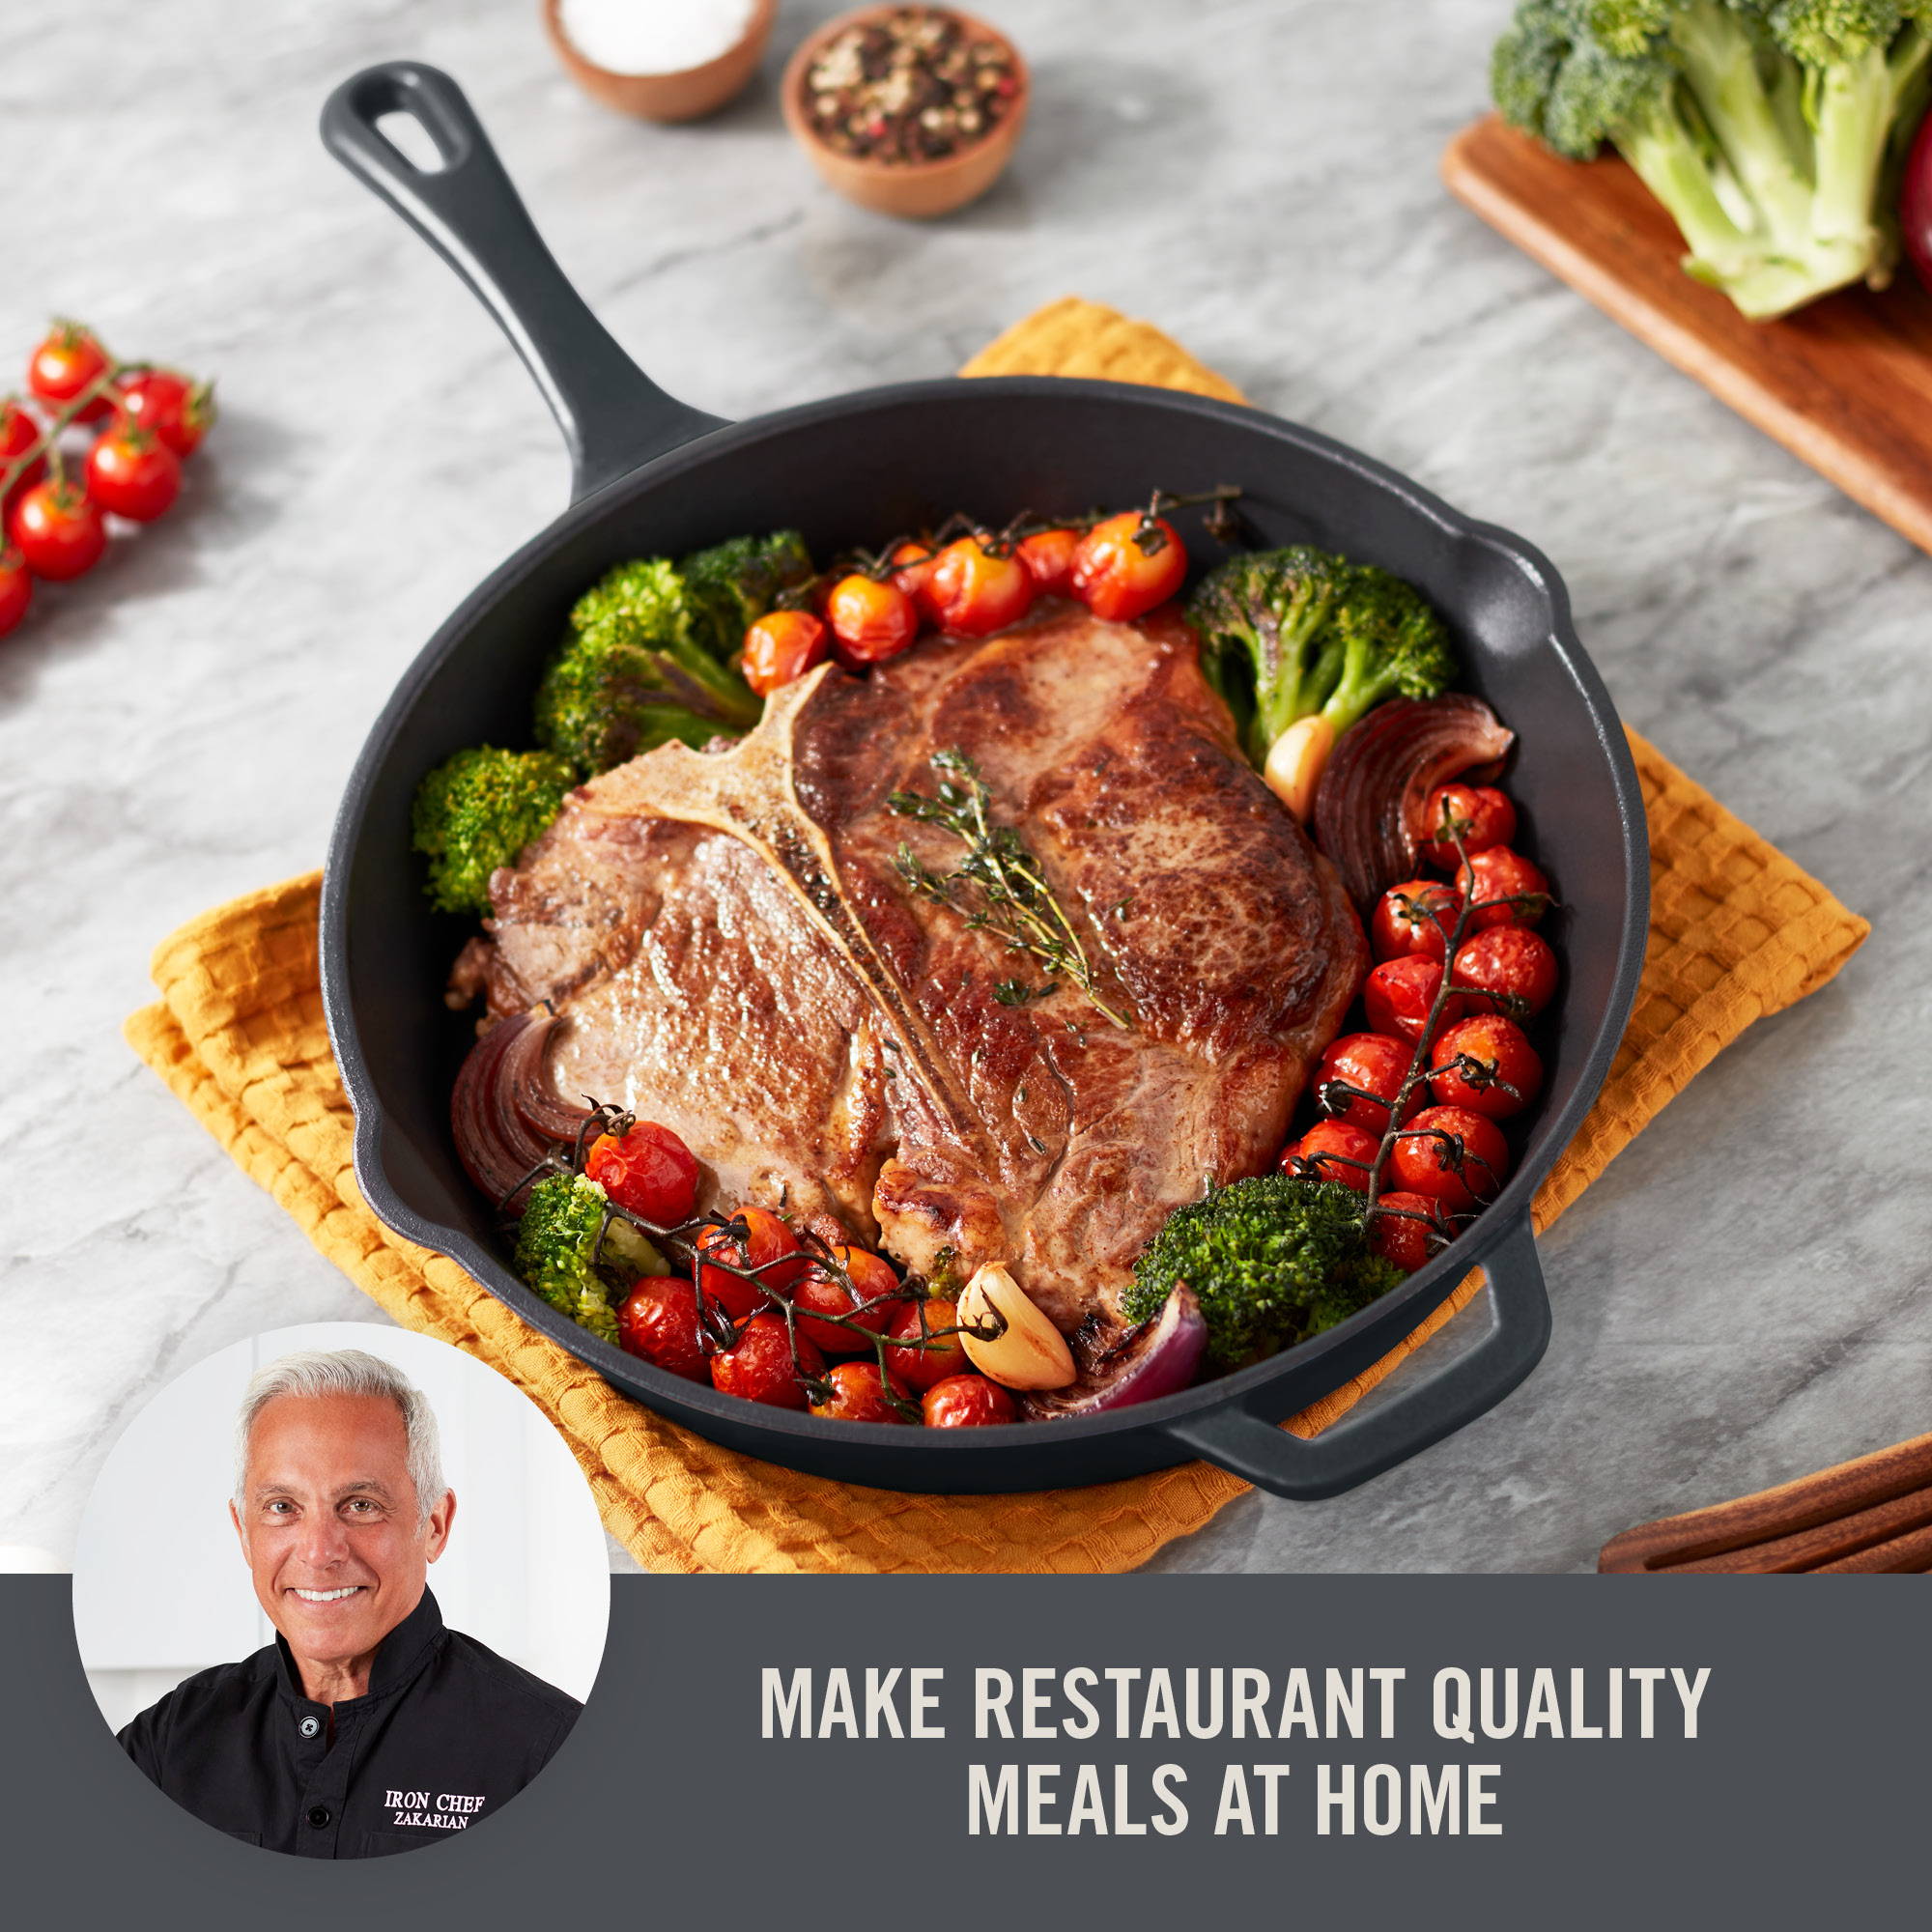 Make restaurant quality meals at home